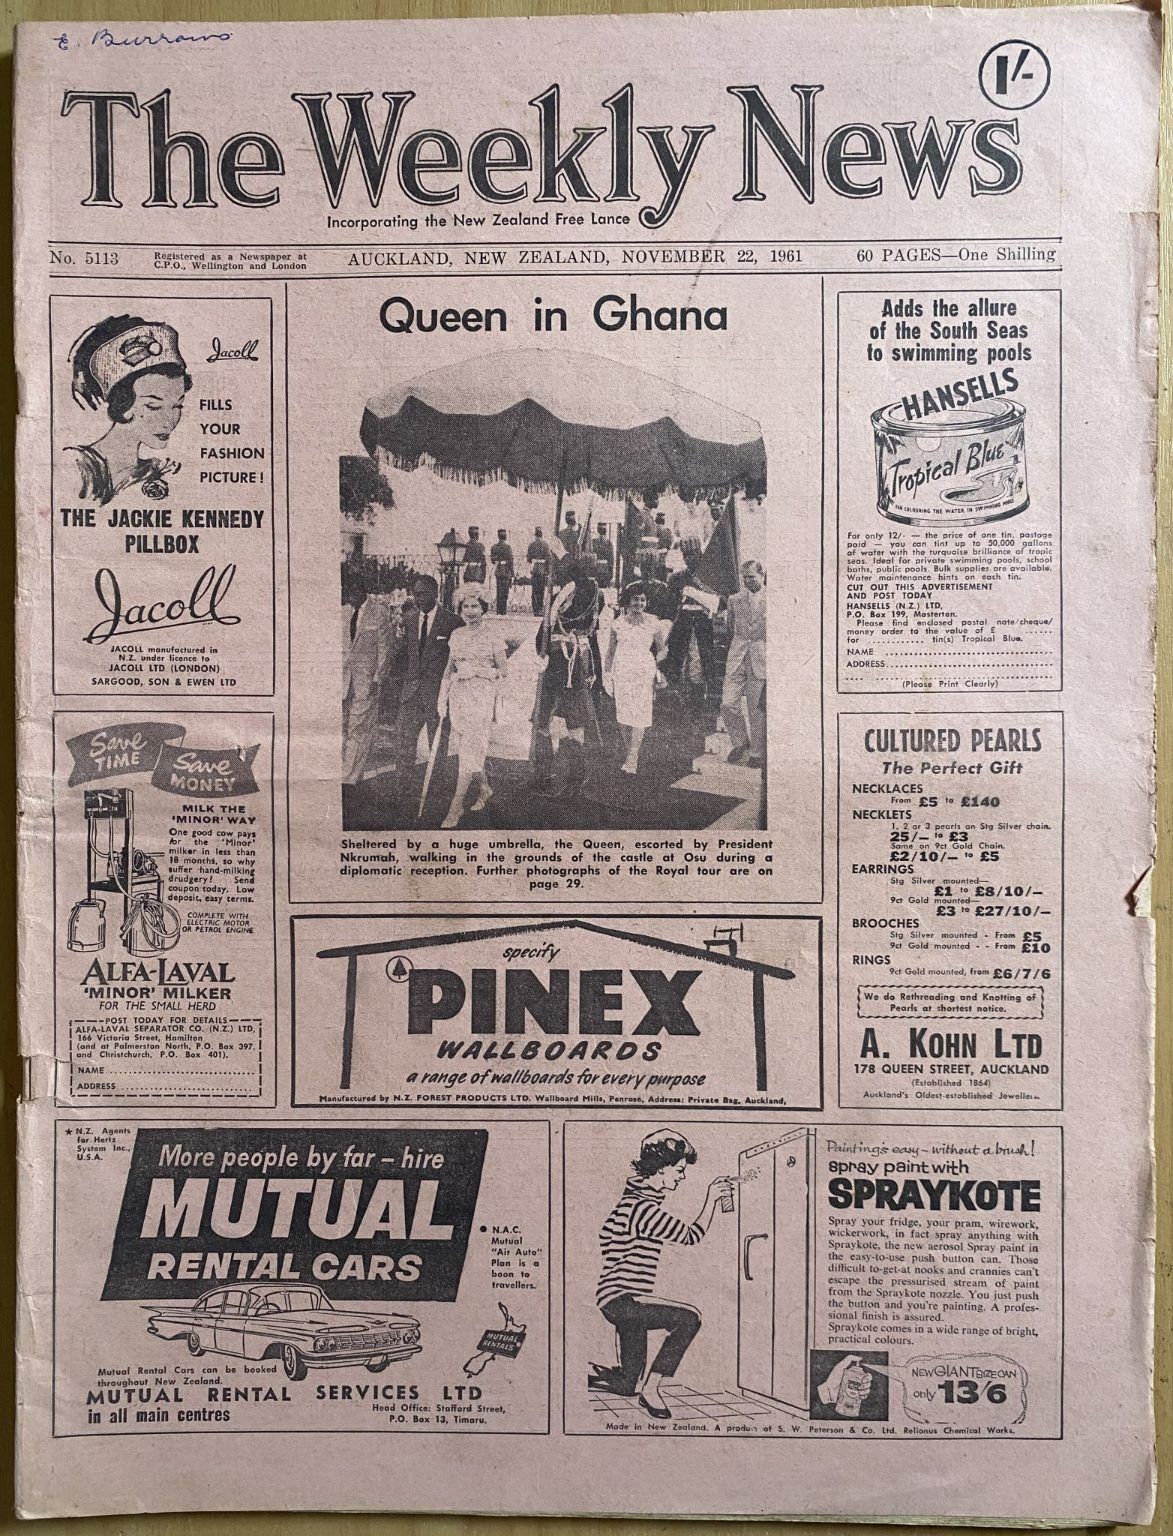 OLD NEWSPAPER: The Weekly News, No. 5113, 22 November 1961